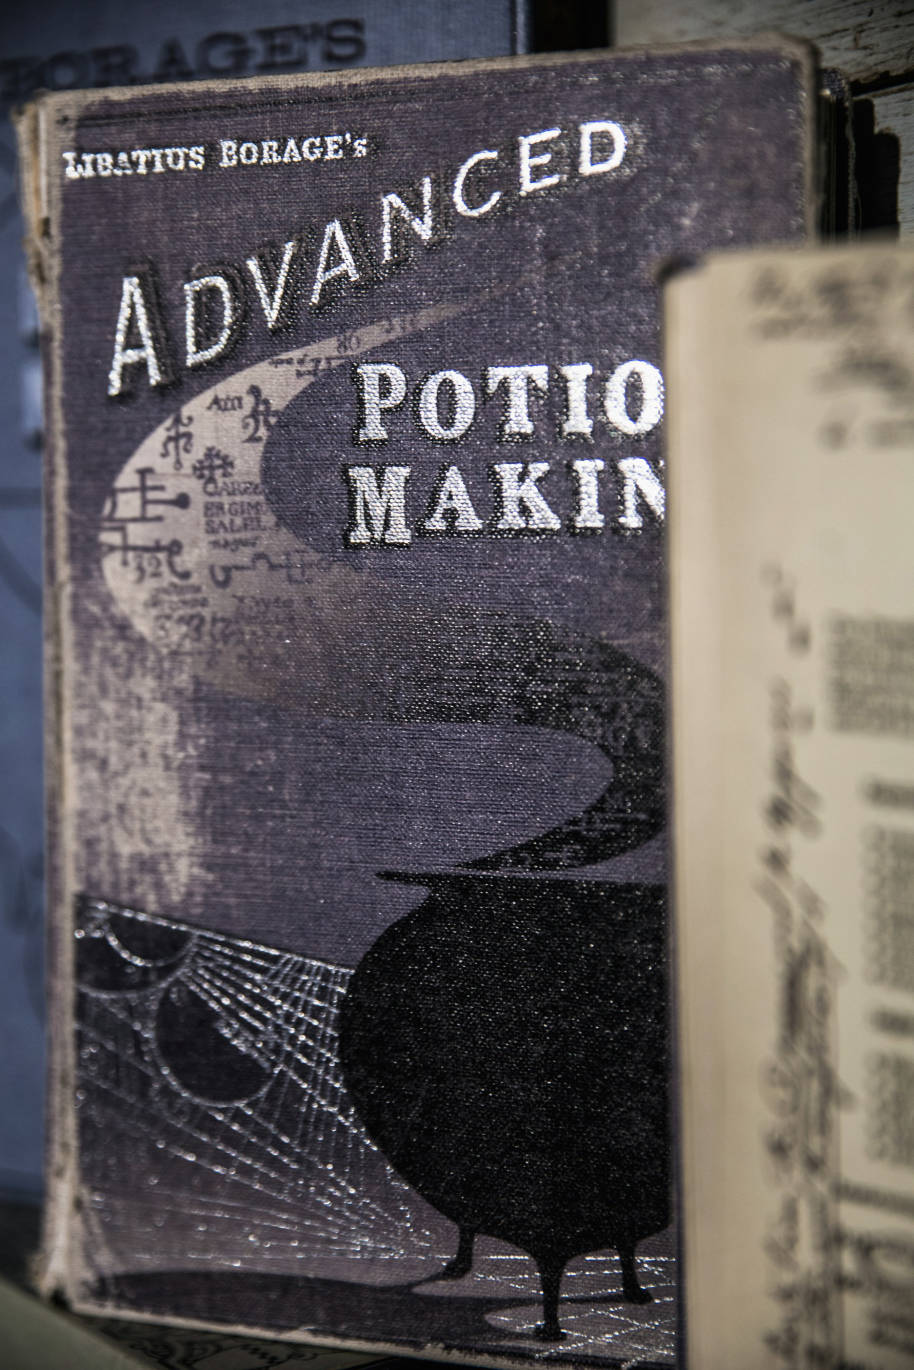 HP-MinaLima-advanced-potion-making-closed-book-cover-web-portrait